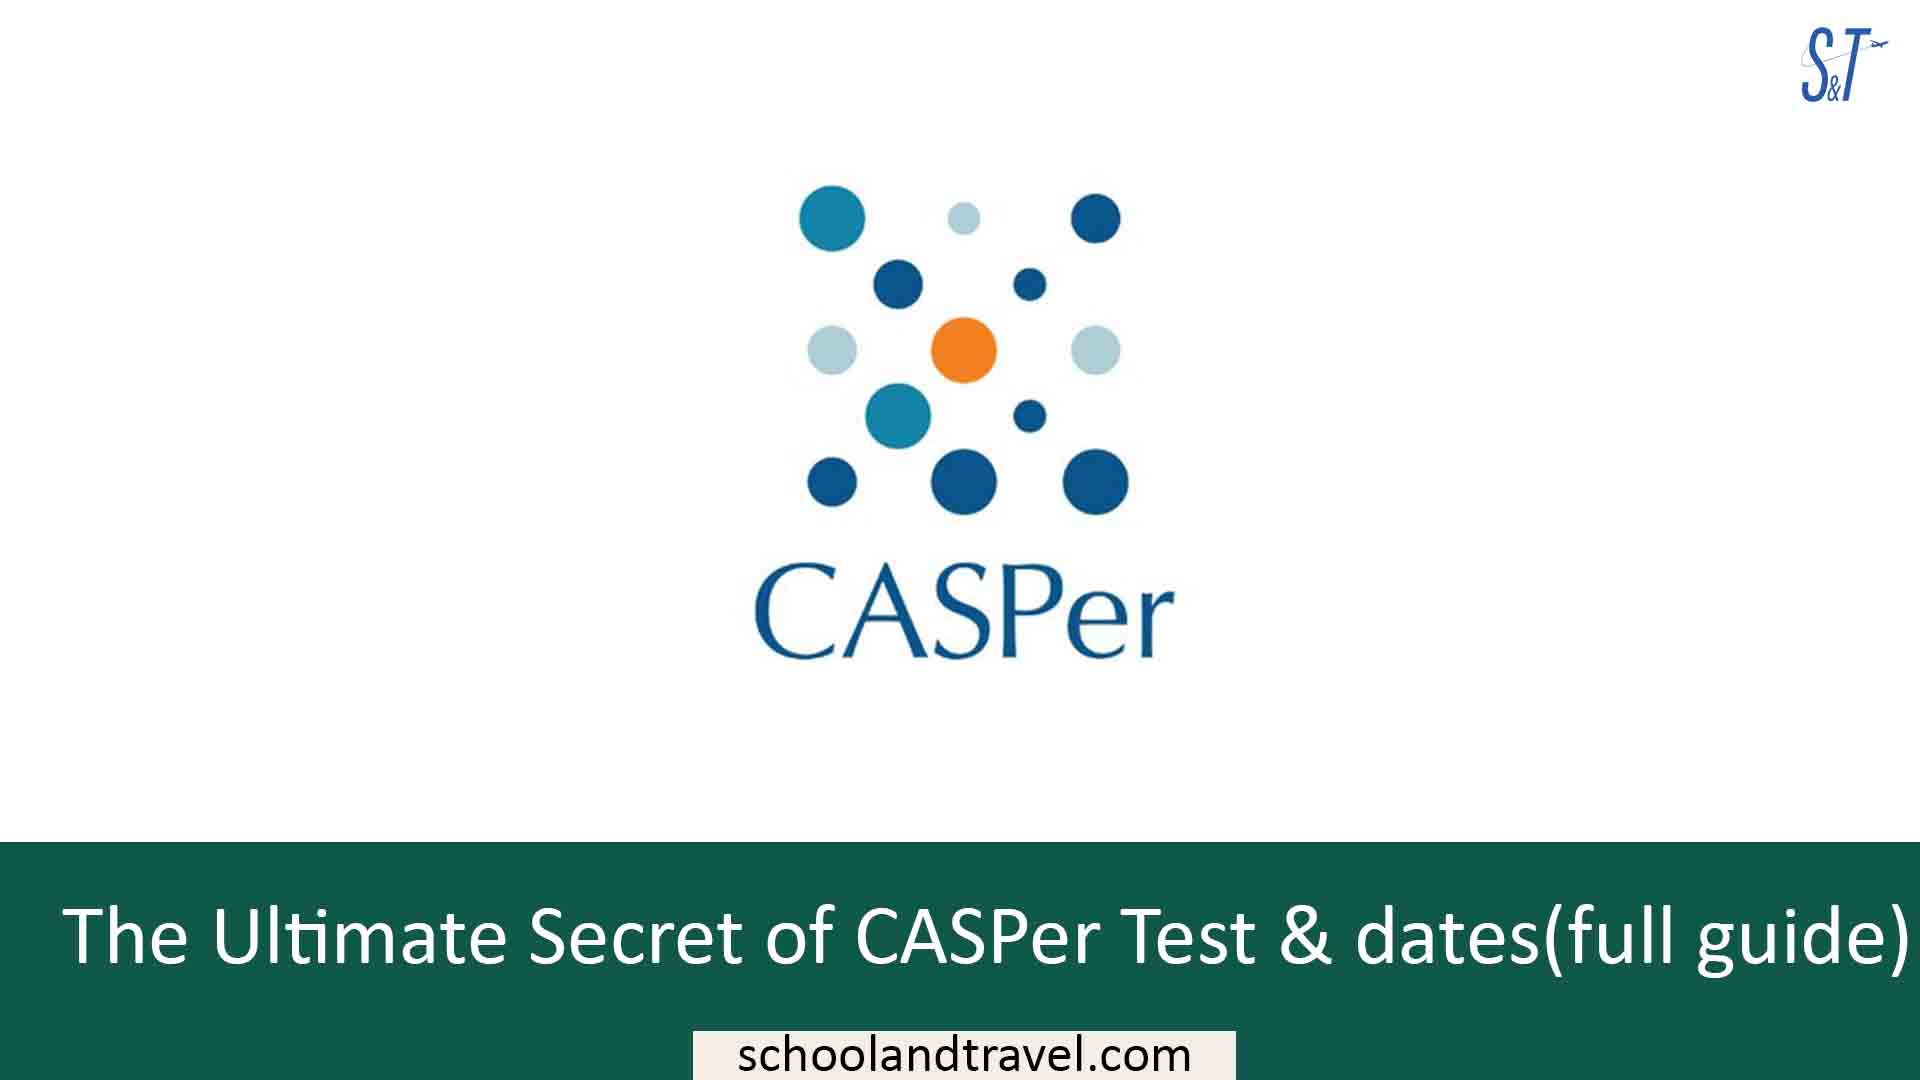 The Ultimate Secret of CASPer Test & dates